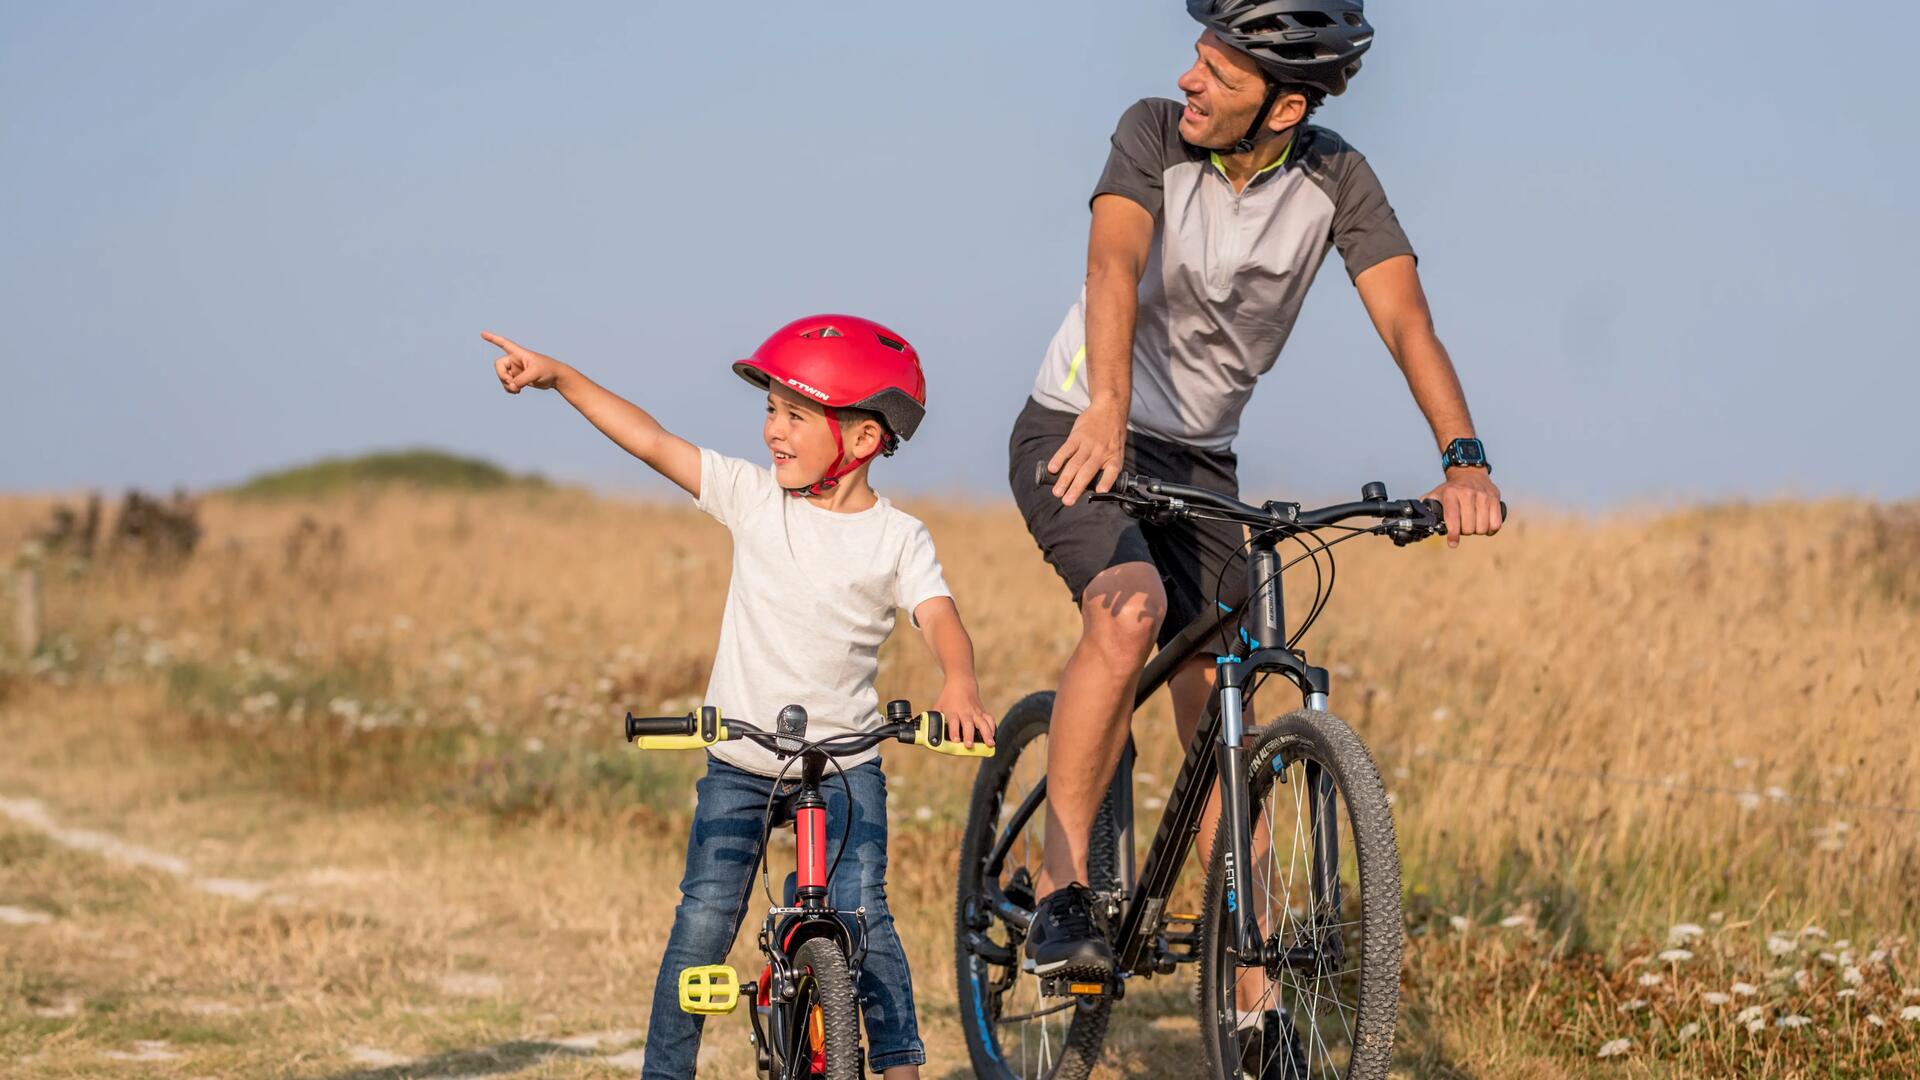 How to choose a kids' bike